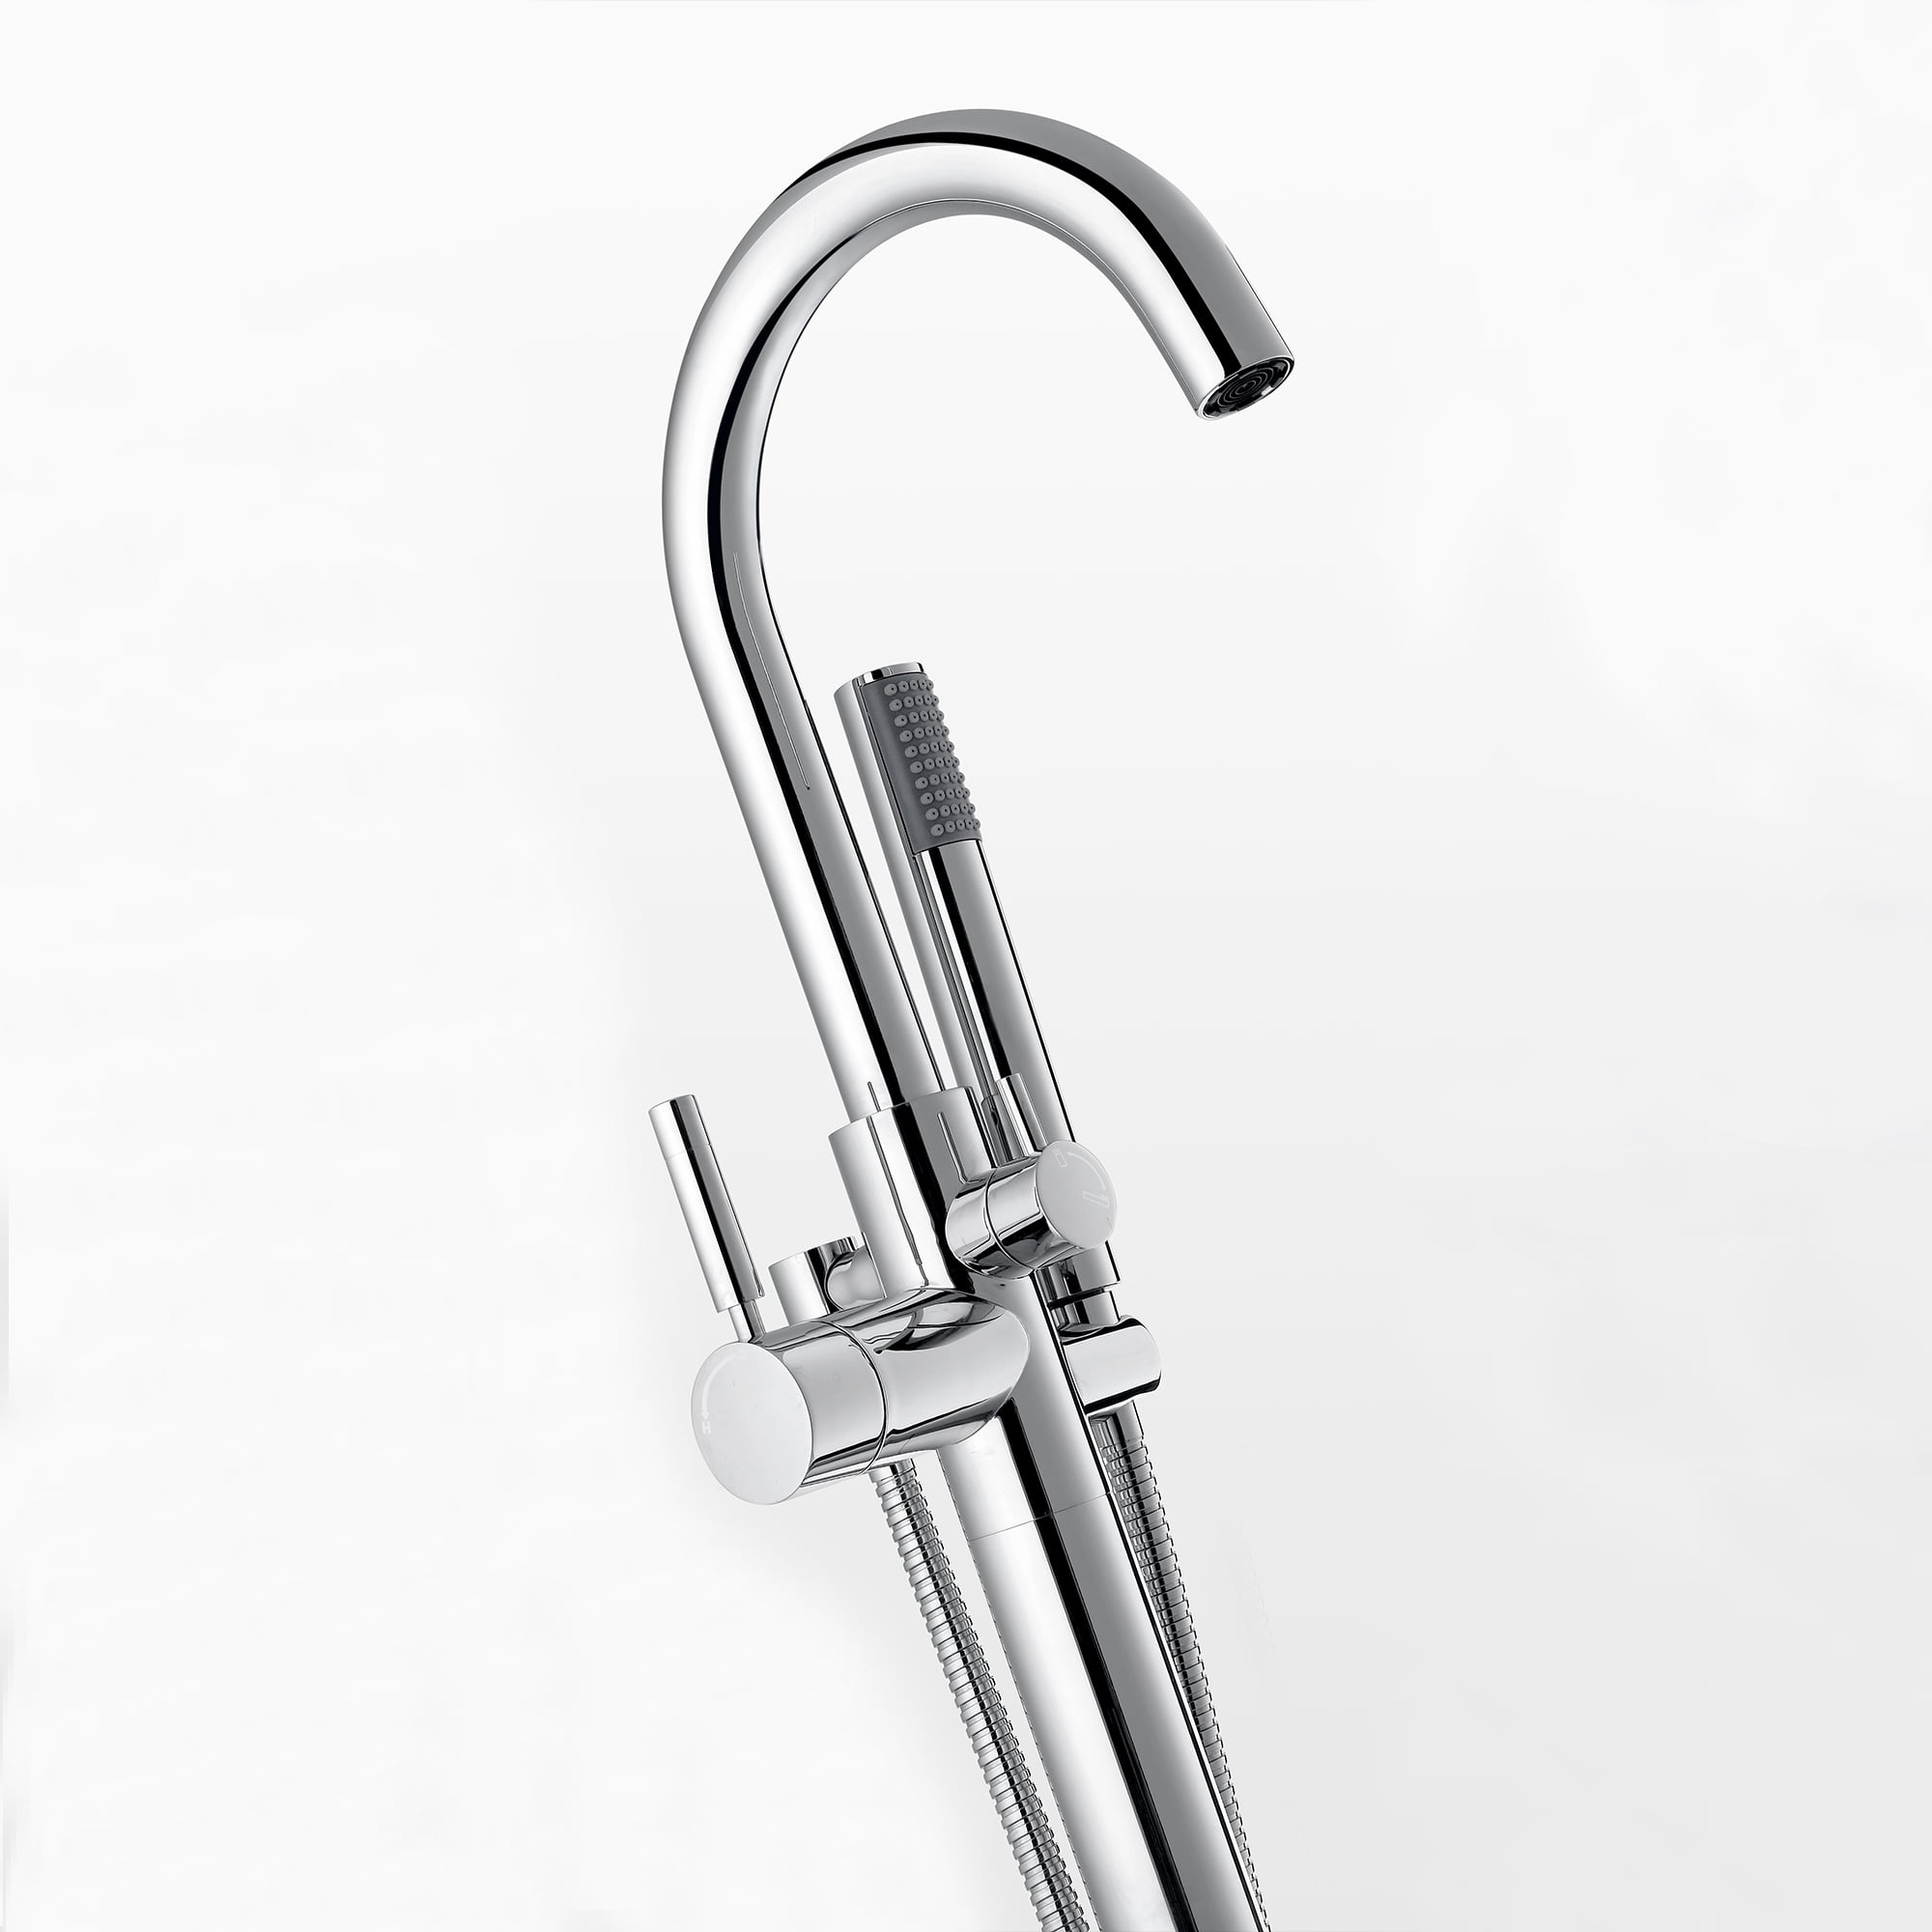 Ove Decors Athena Single Handle Floor, Ove Decors Athena Chrome 1 Handle Adjustable Freestanding Bathtub Faucet